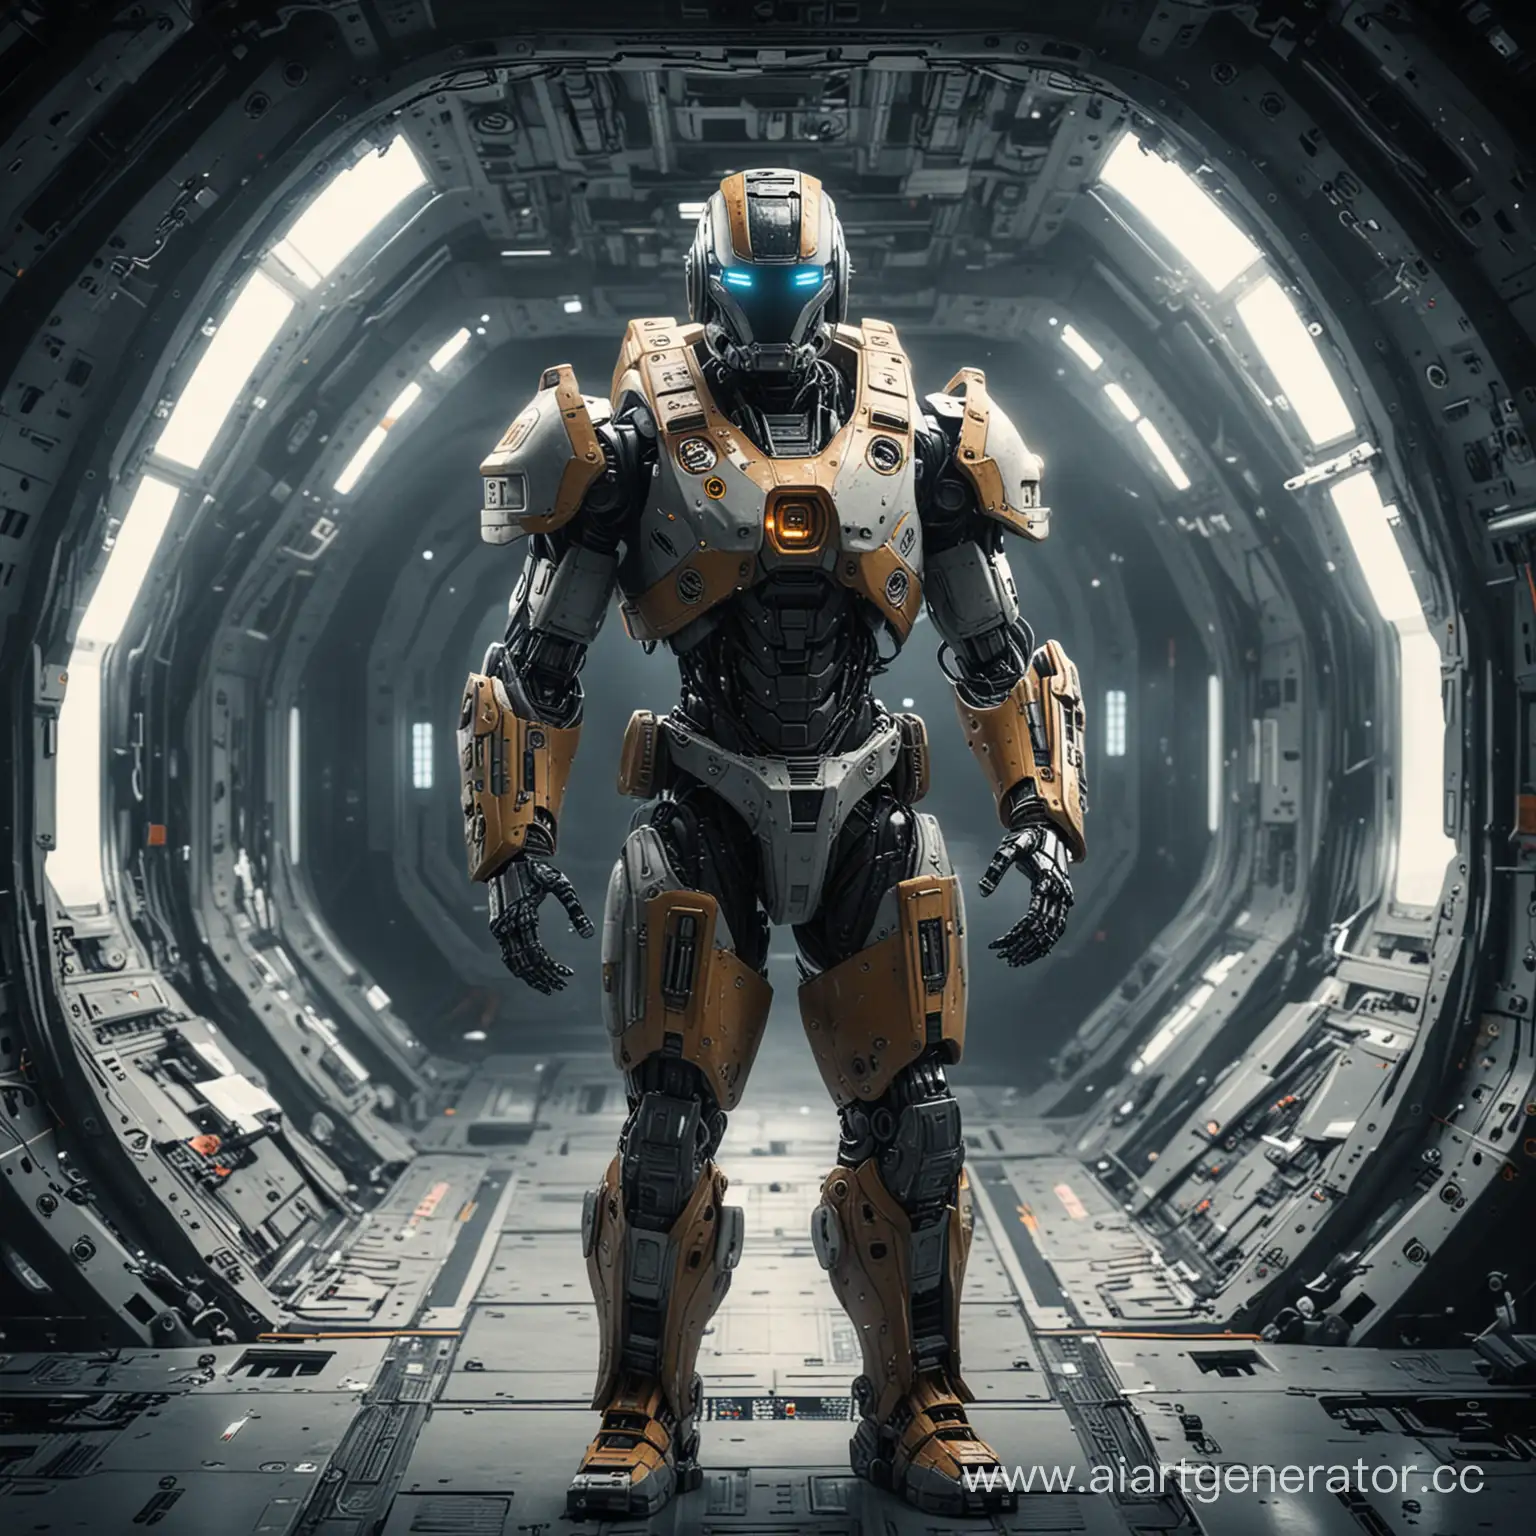 Futuristic-Robot-Soldier-Patrolling-Inside-a-Sleek-Spaceship